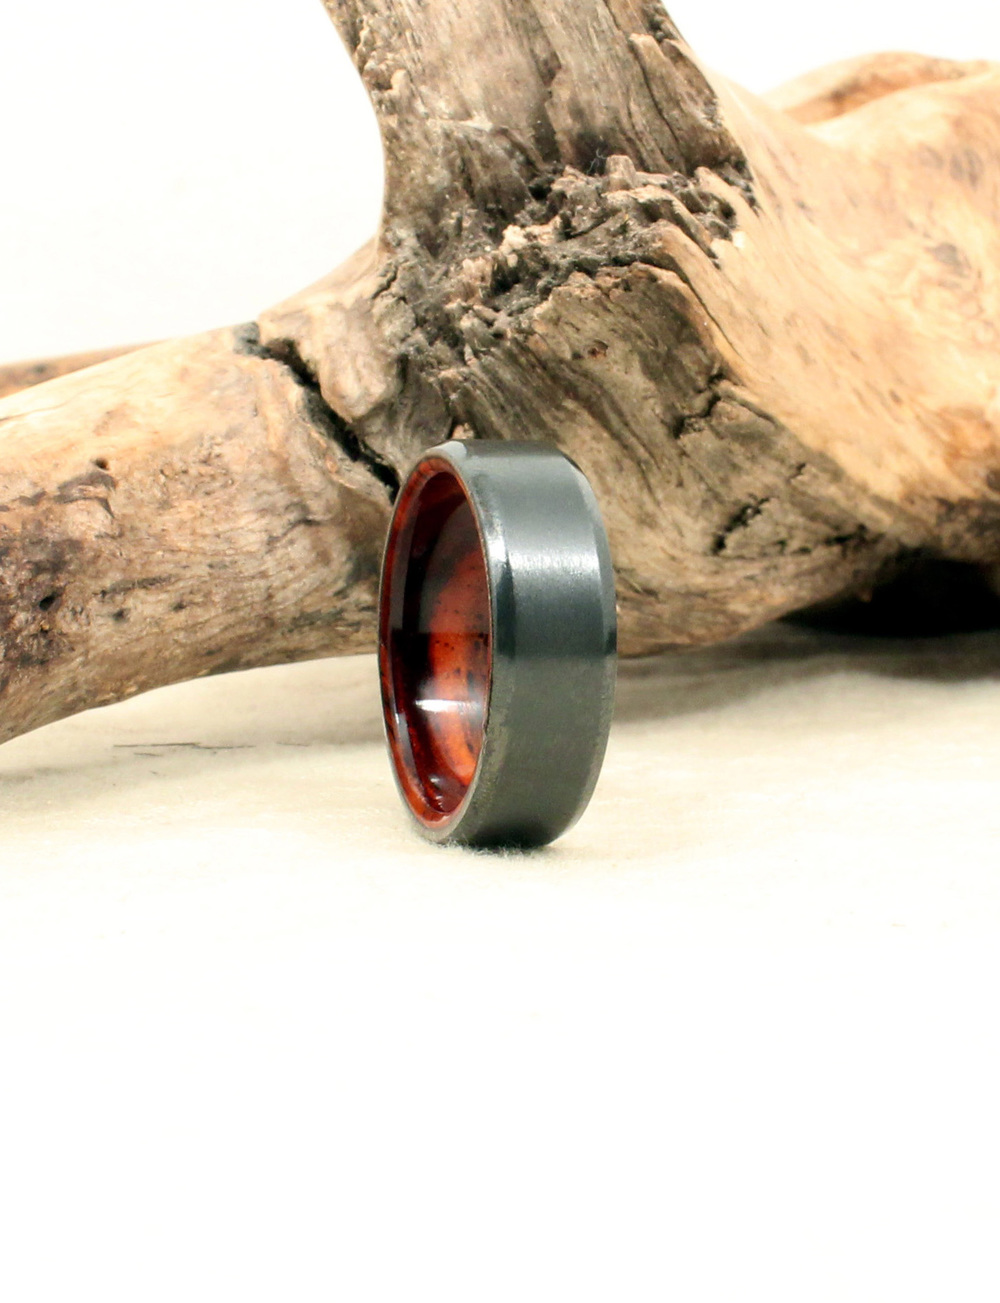 Wooden Rings - 25cm (10)